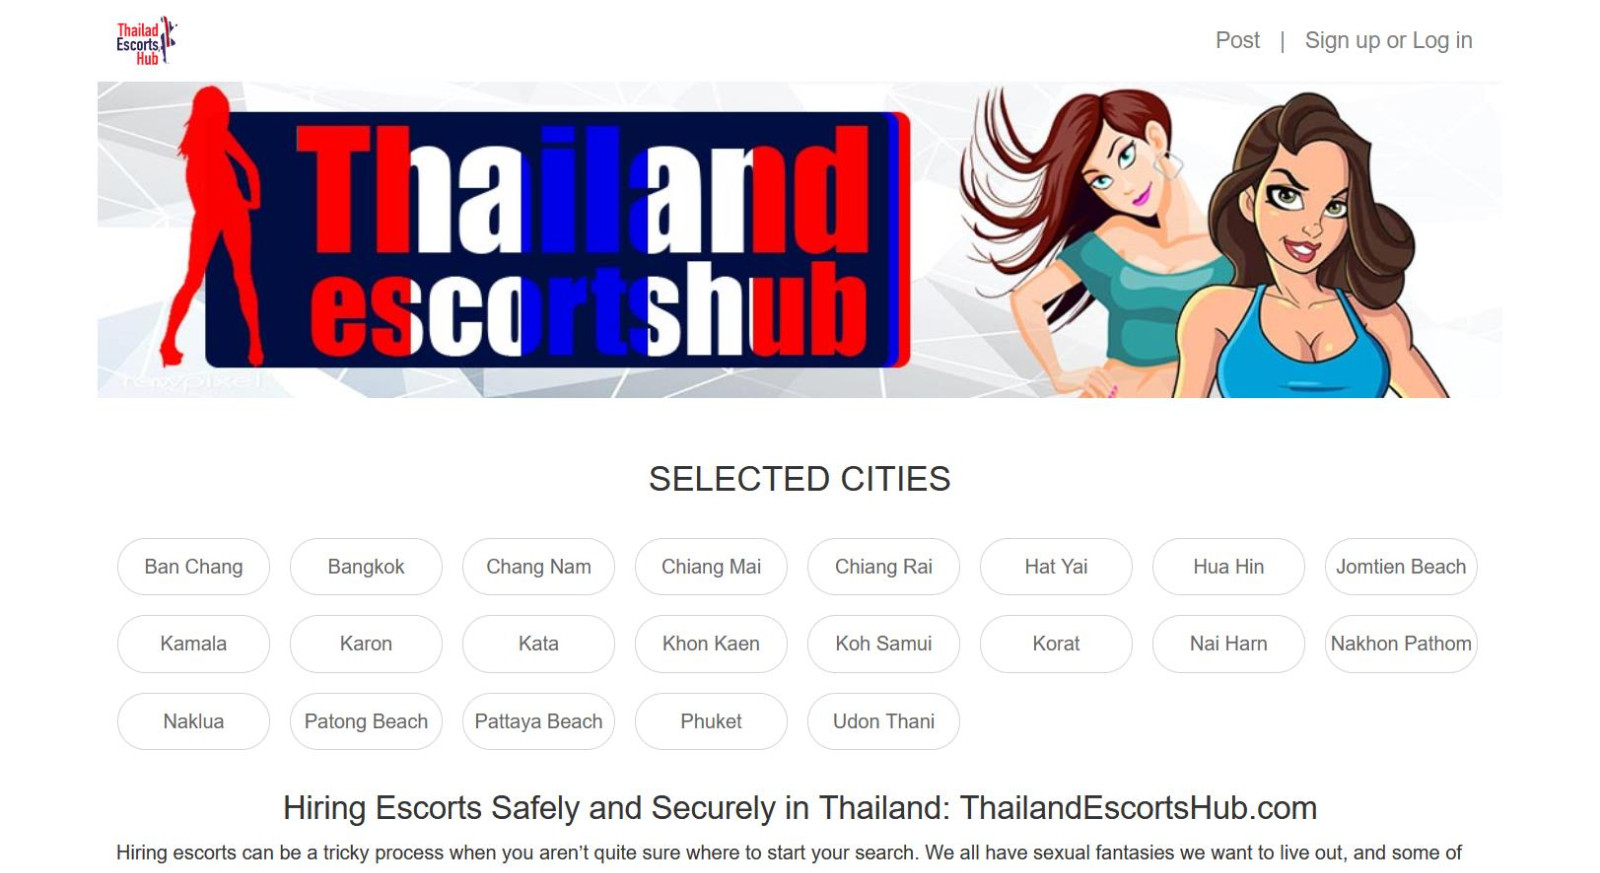 ThailandEscortsHub